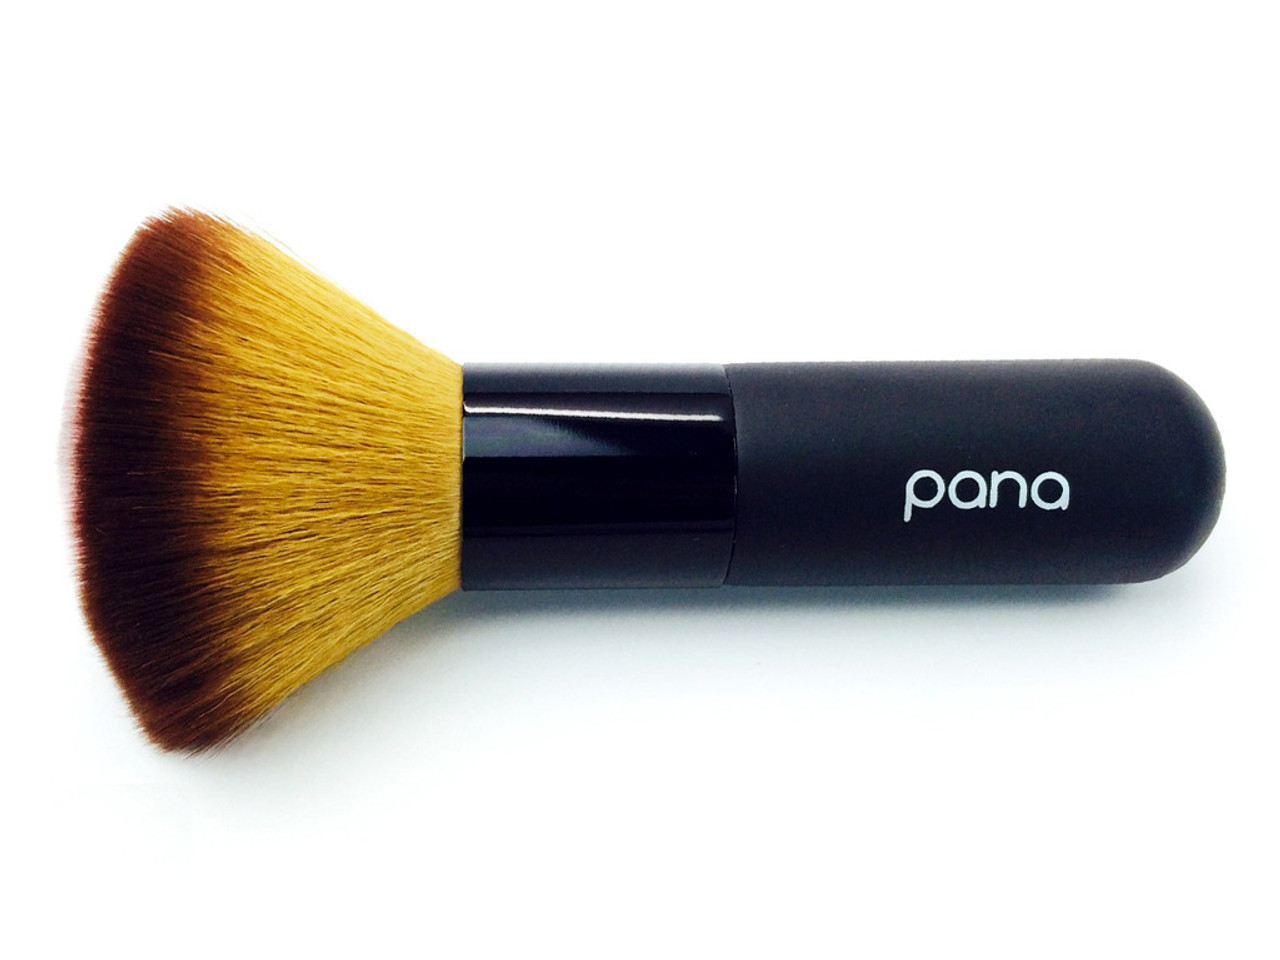 Pana Brand Two-tone Colored Powder Brush (Professional Quality)